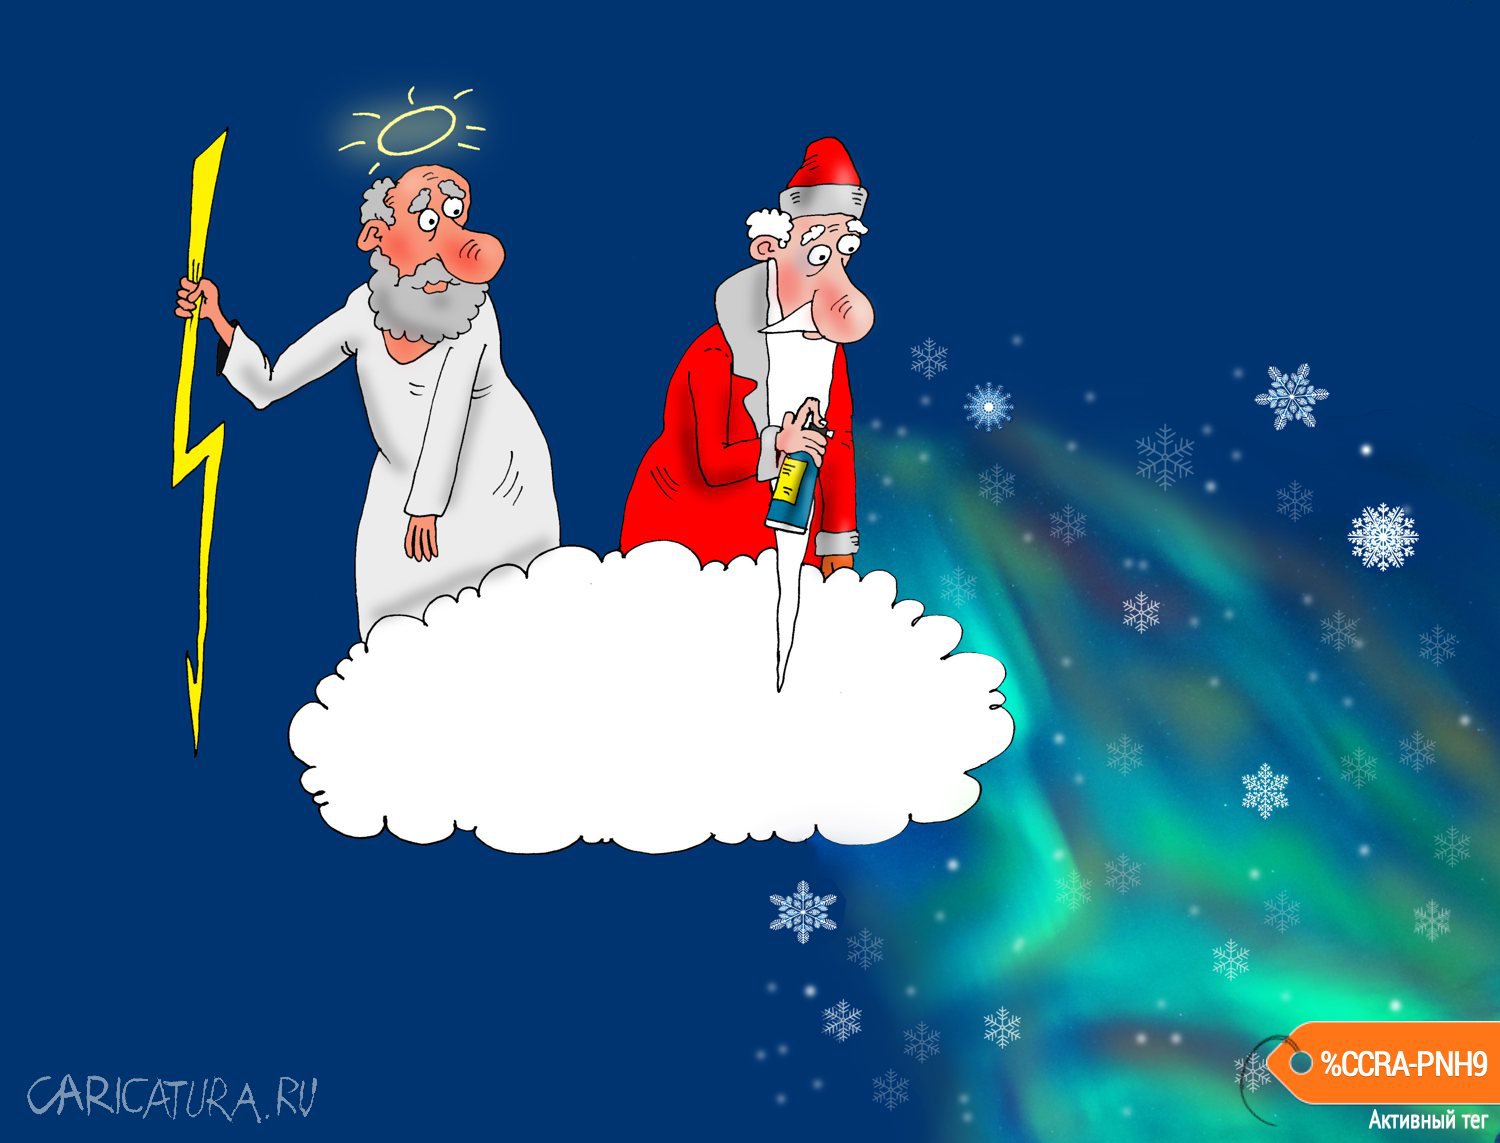 Карикатура "С небес", Валерий Тарасенко